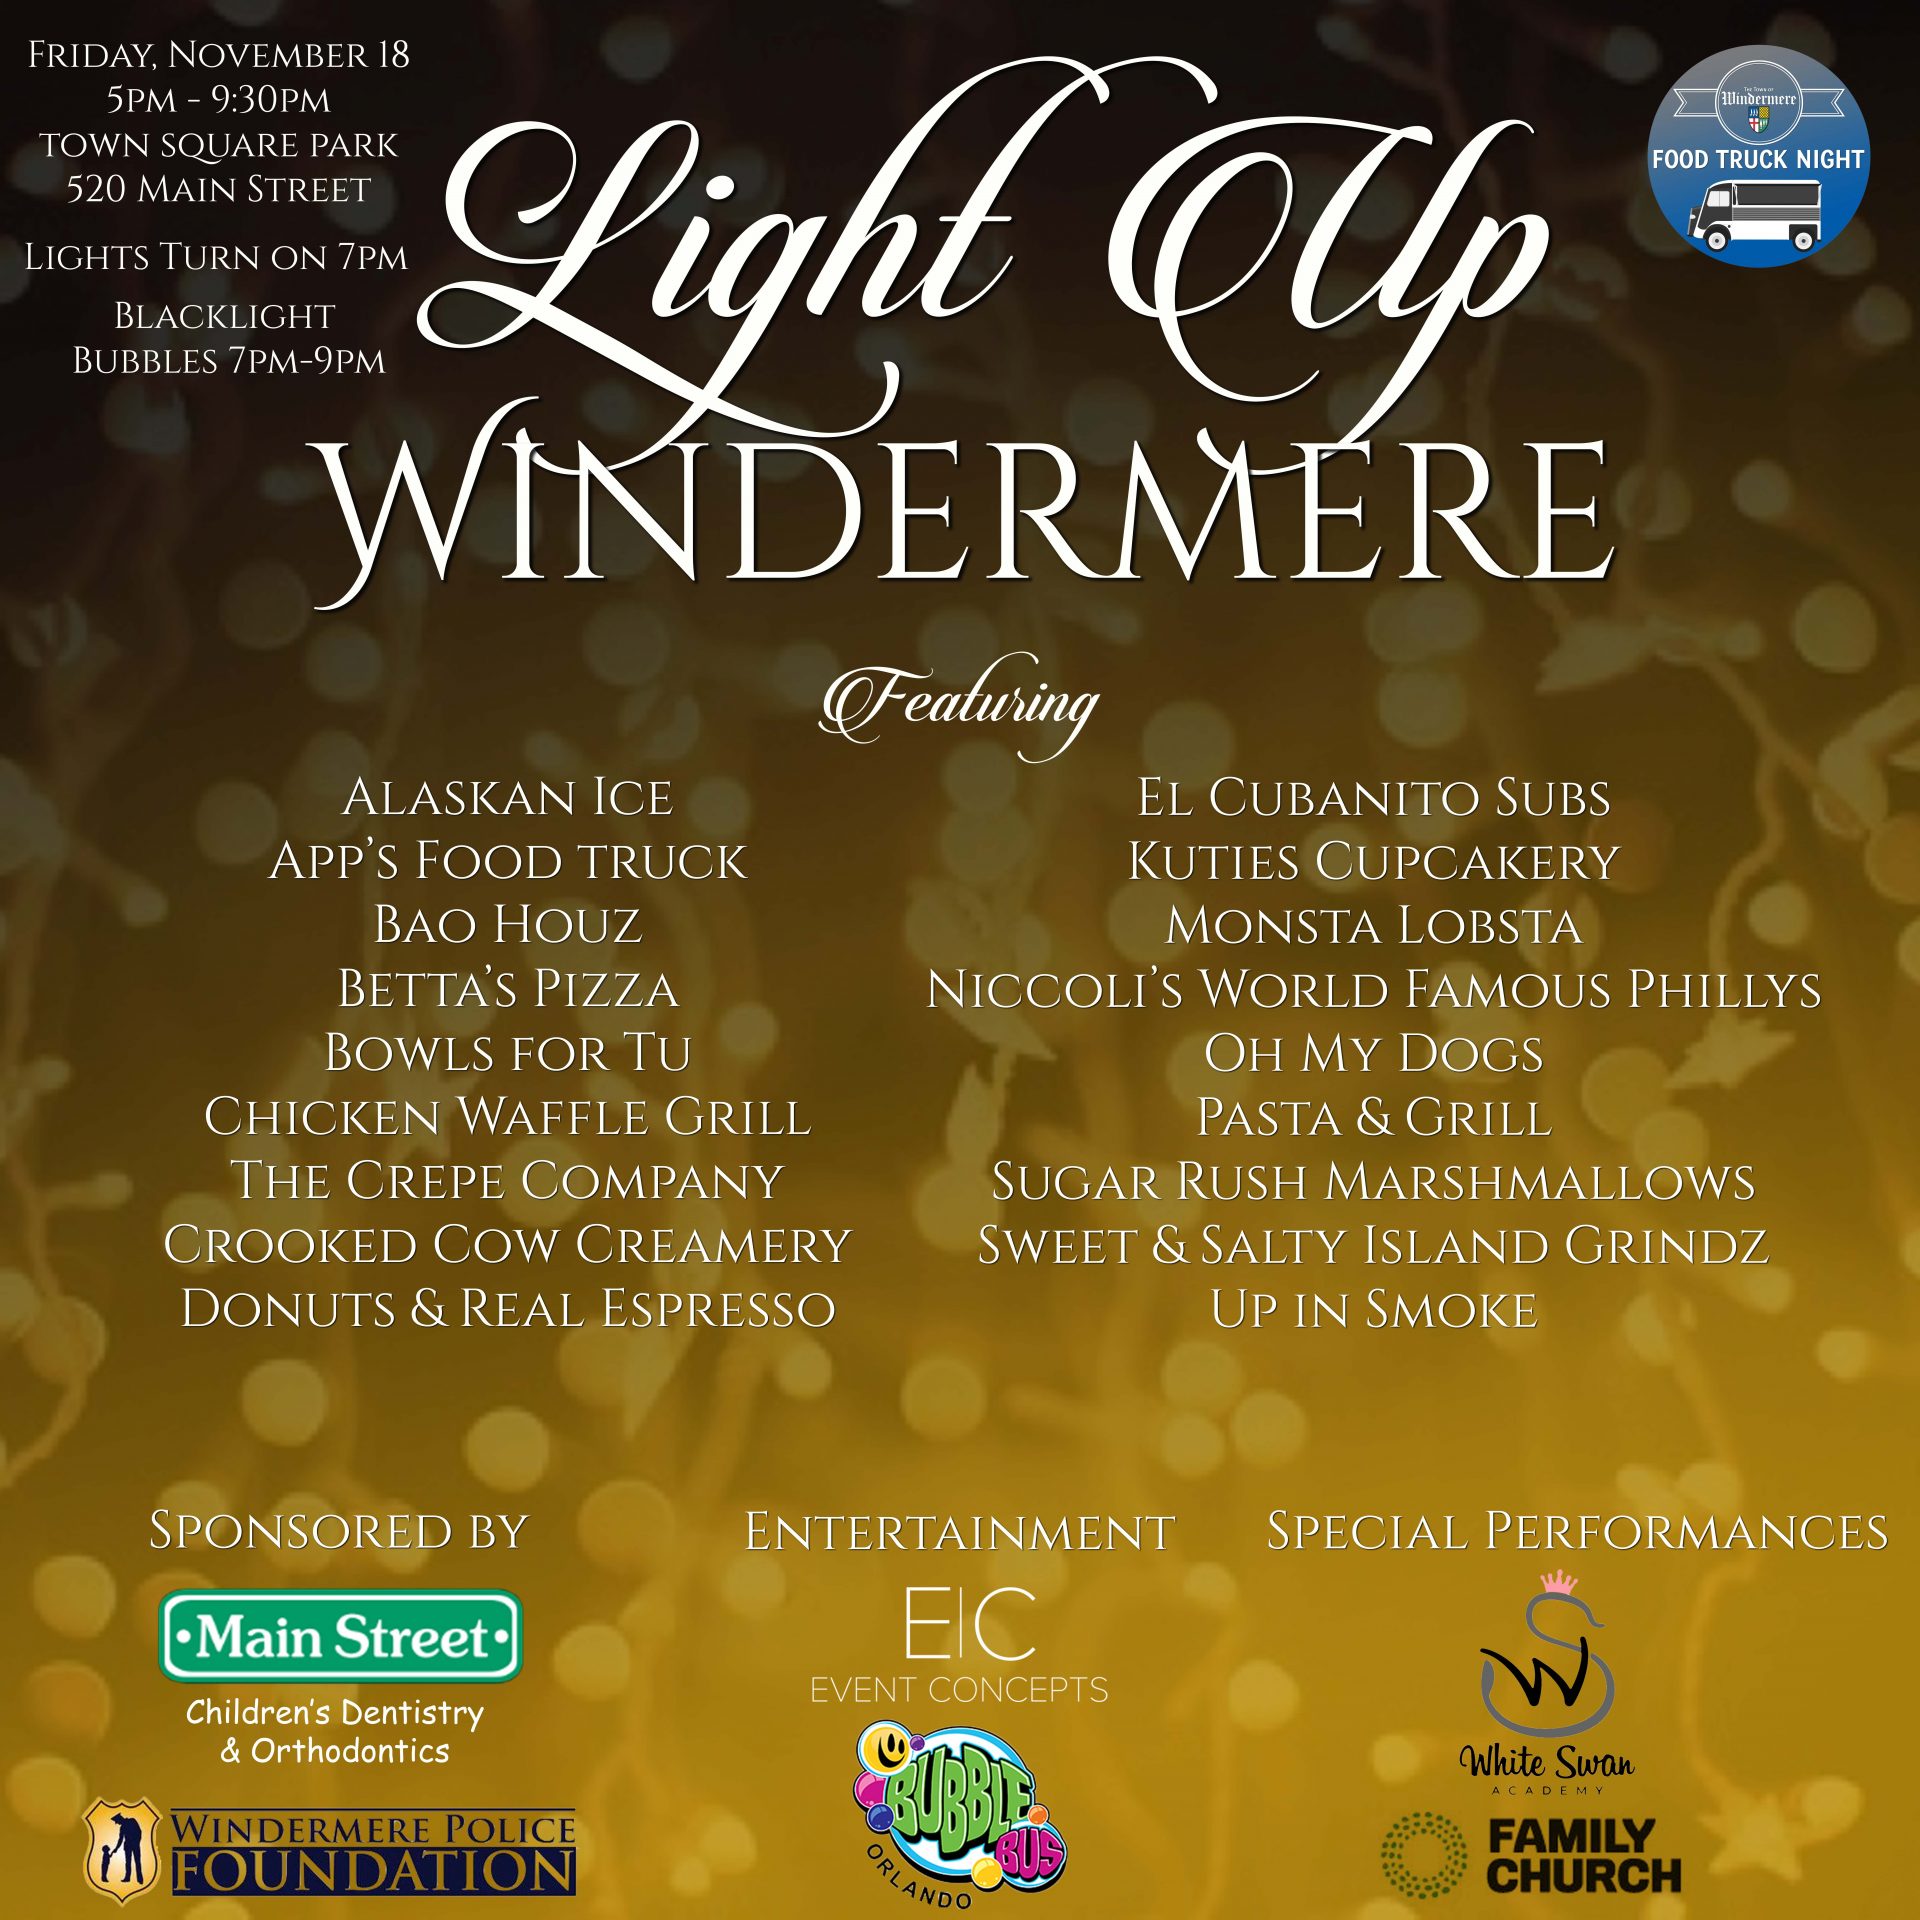 Light Up Windermere / November Food Truck Night Official Website of